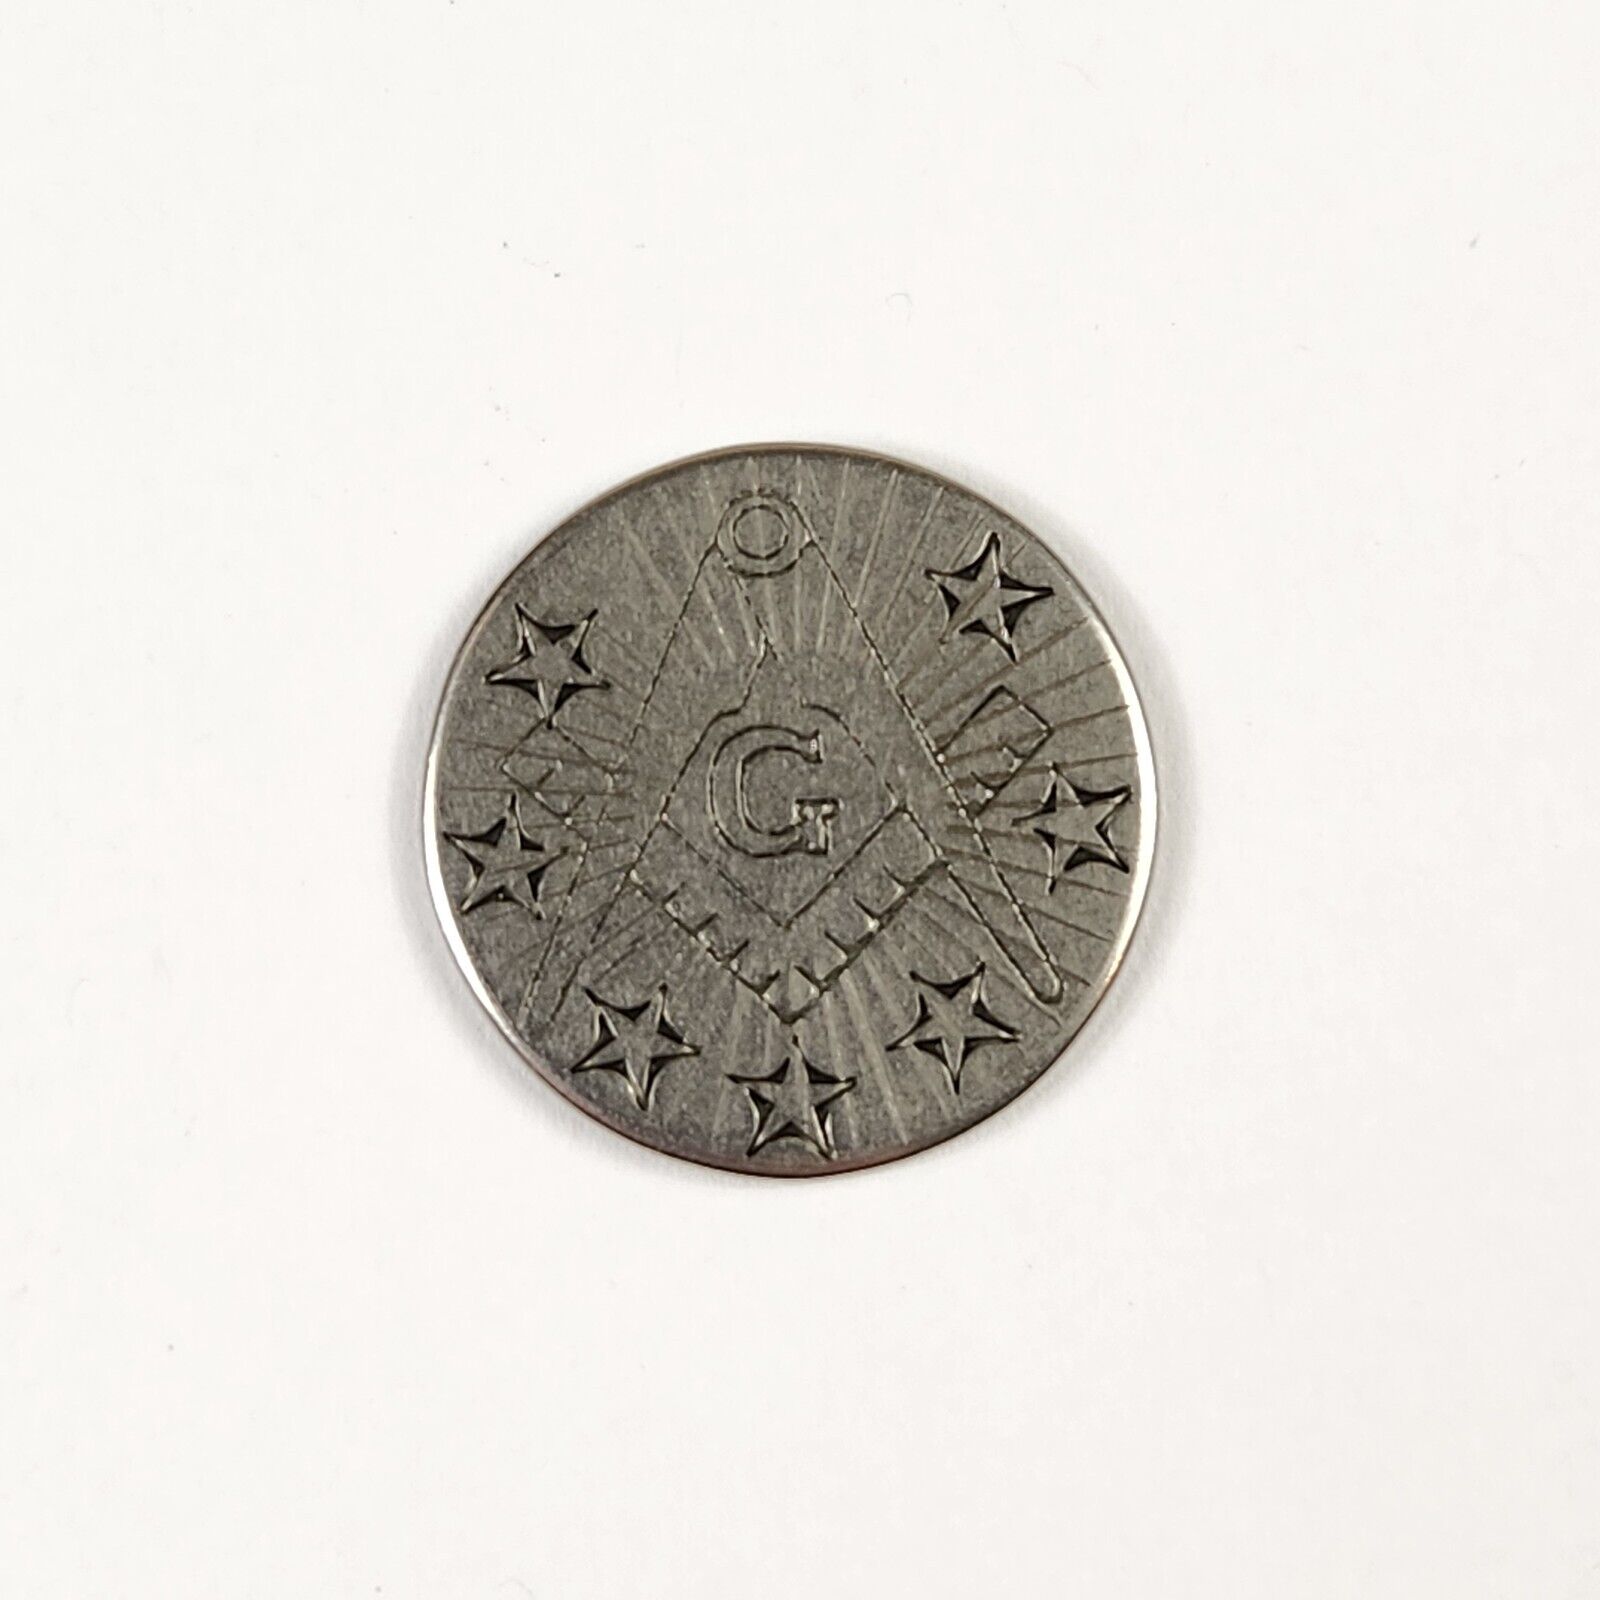 Freemason Masonic Mason Tuit Challenge Coin Medal Get A Round To It VTG Metal